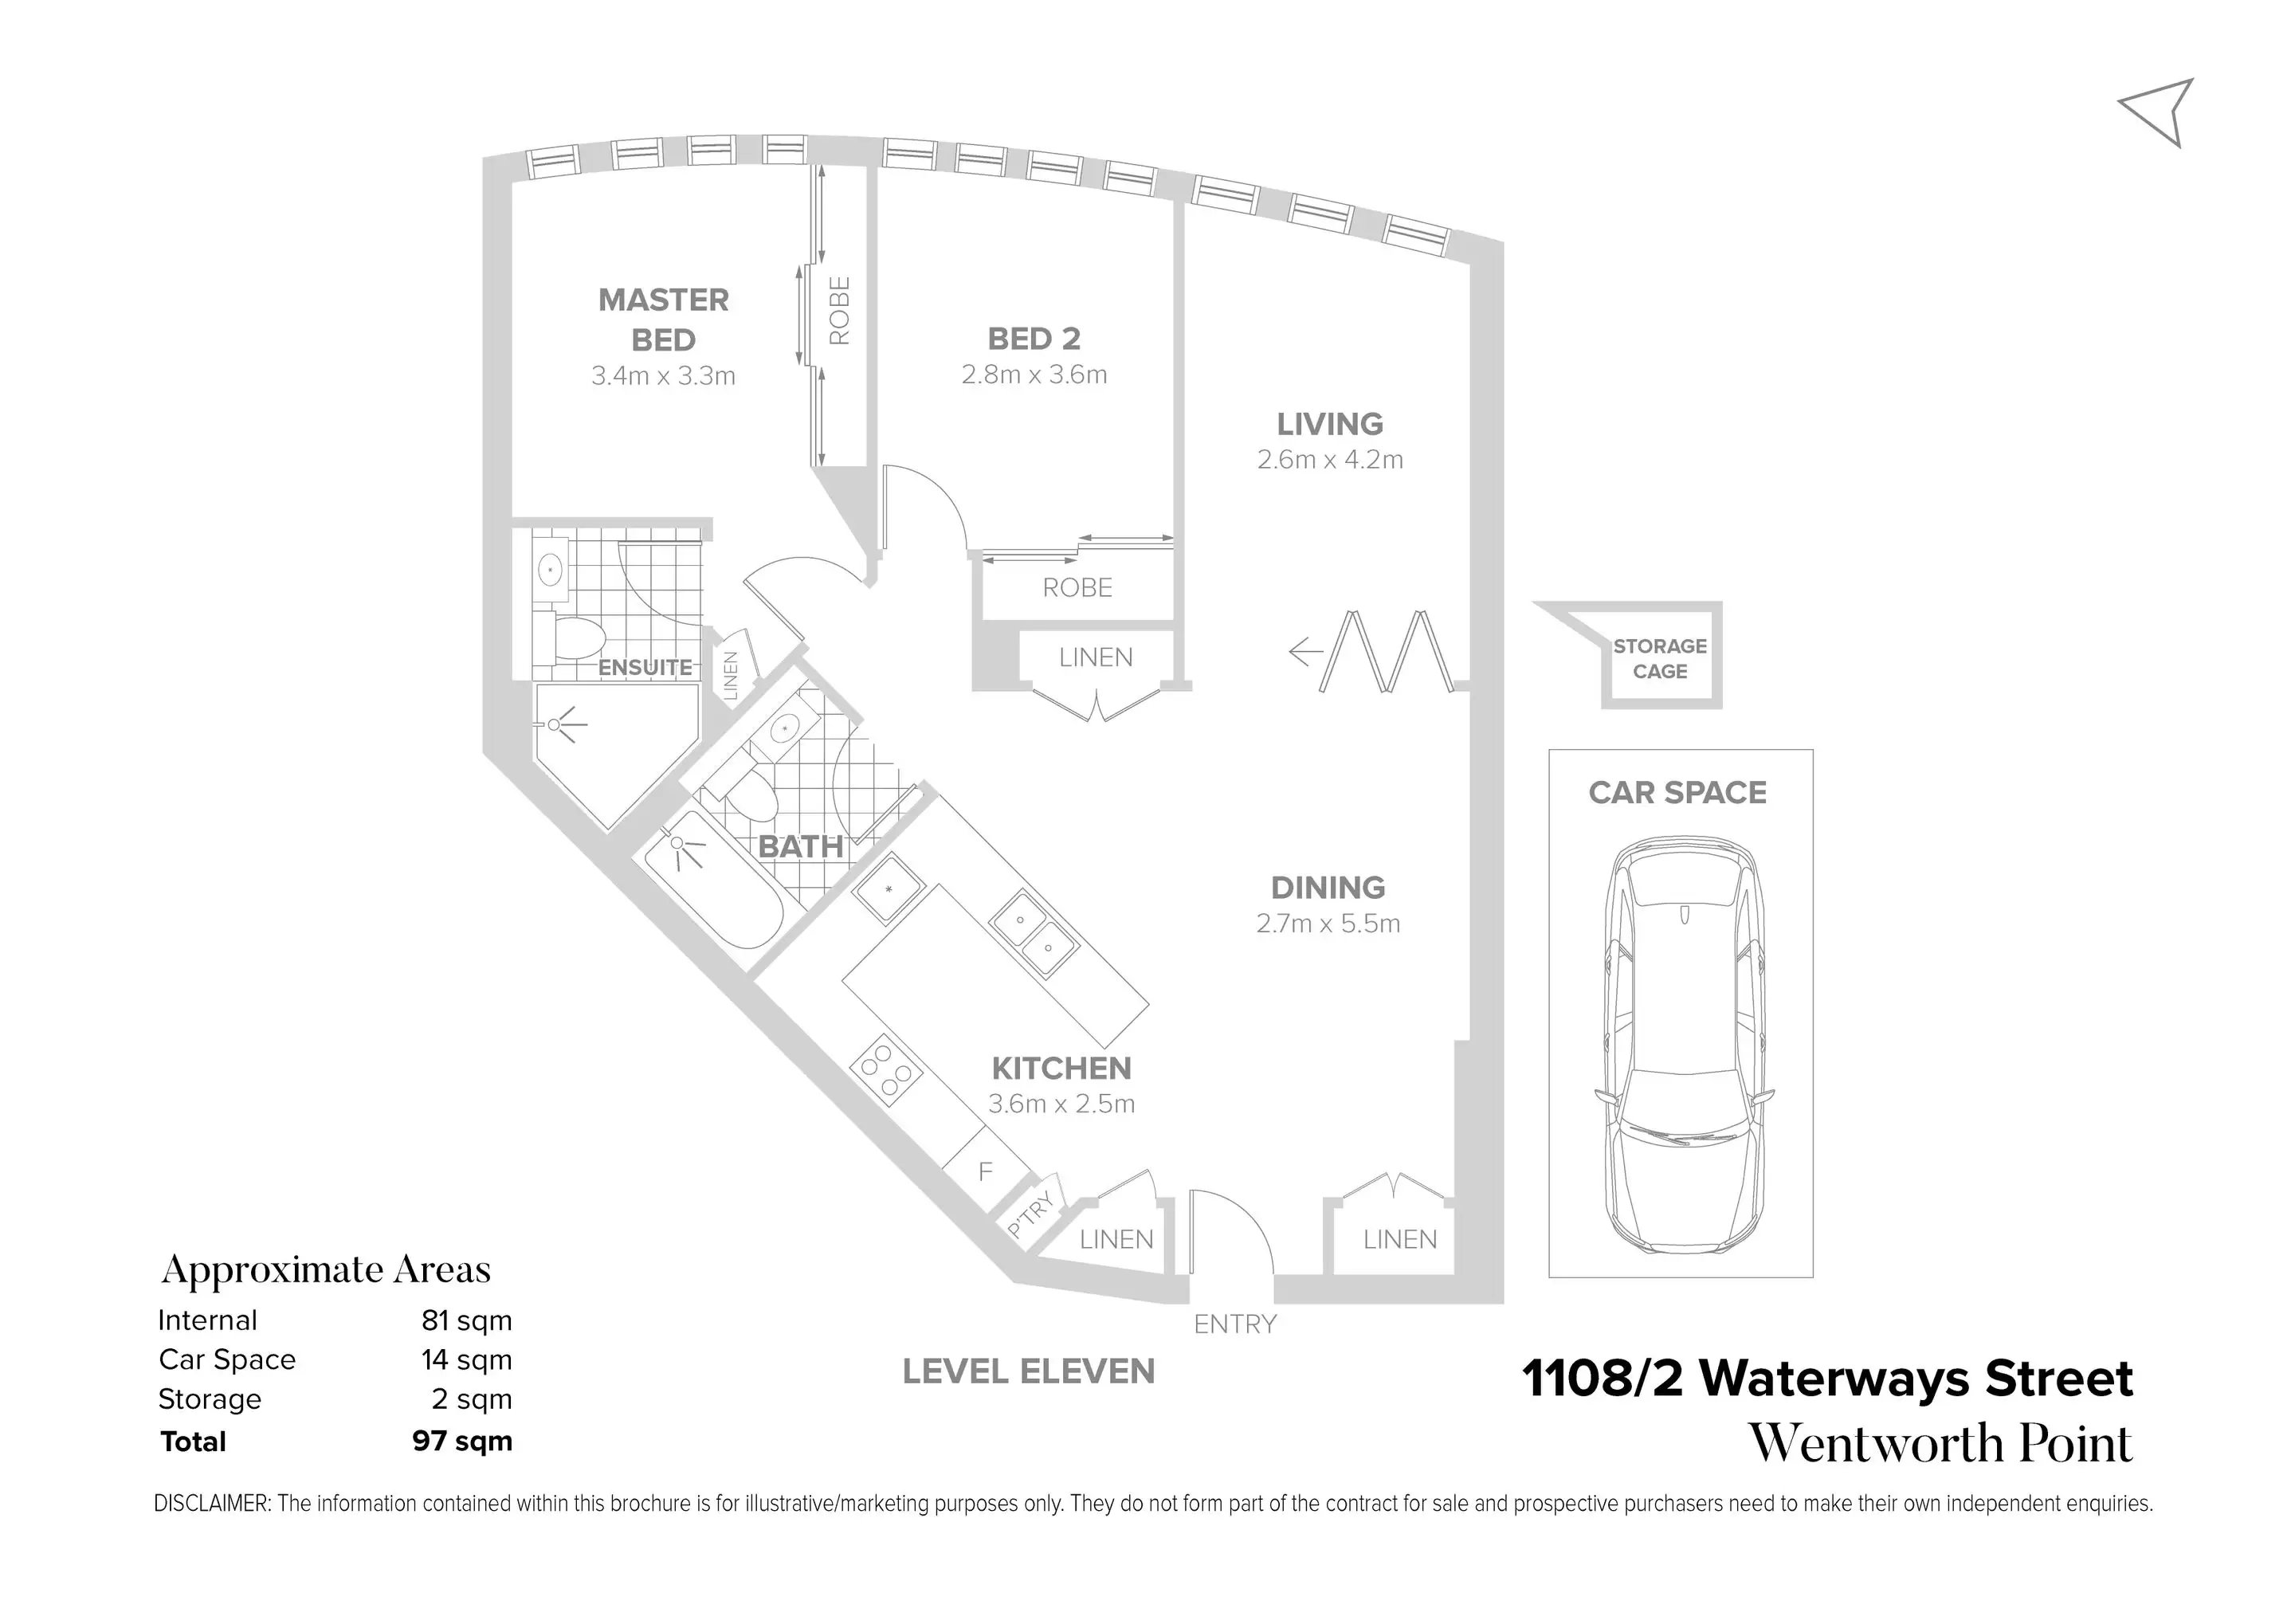 1108/2 Waterways Street, Wentworth Point Sold by Chidiac Realty - floorplan